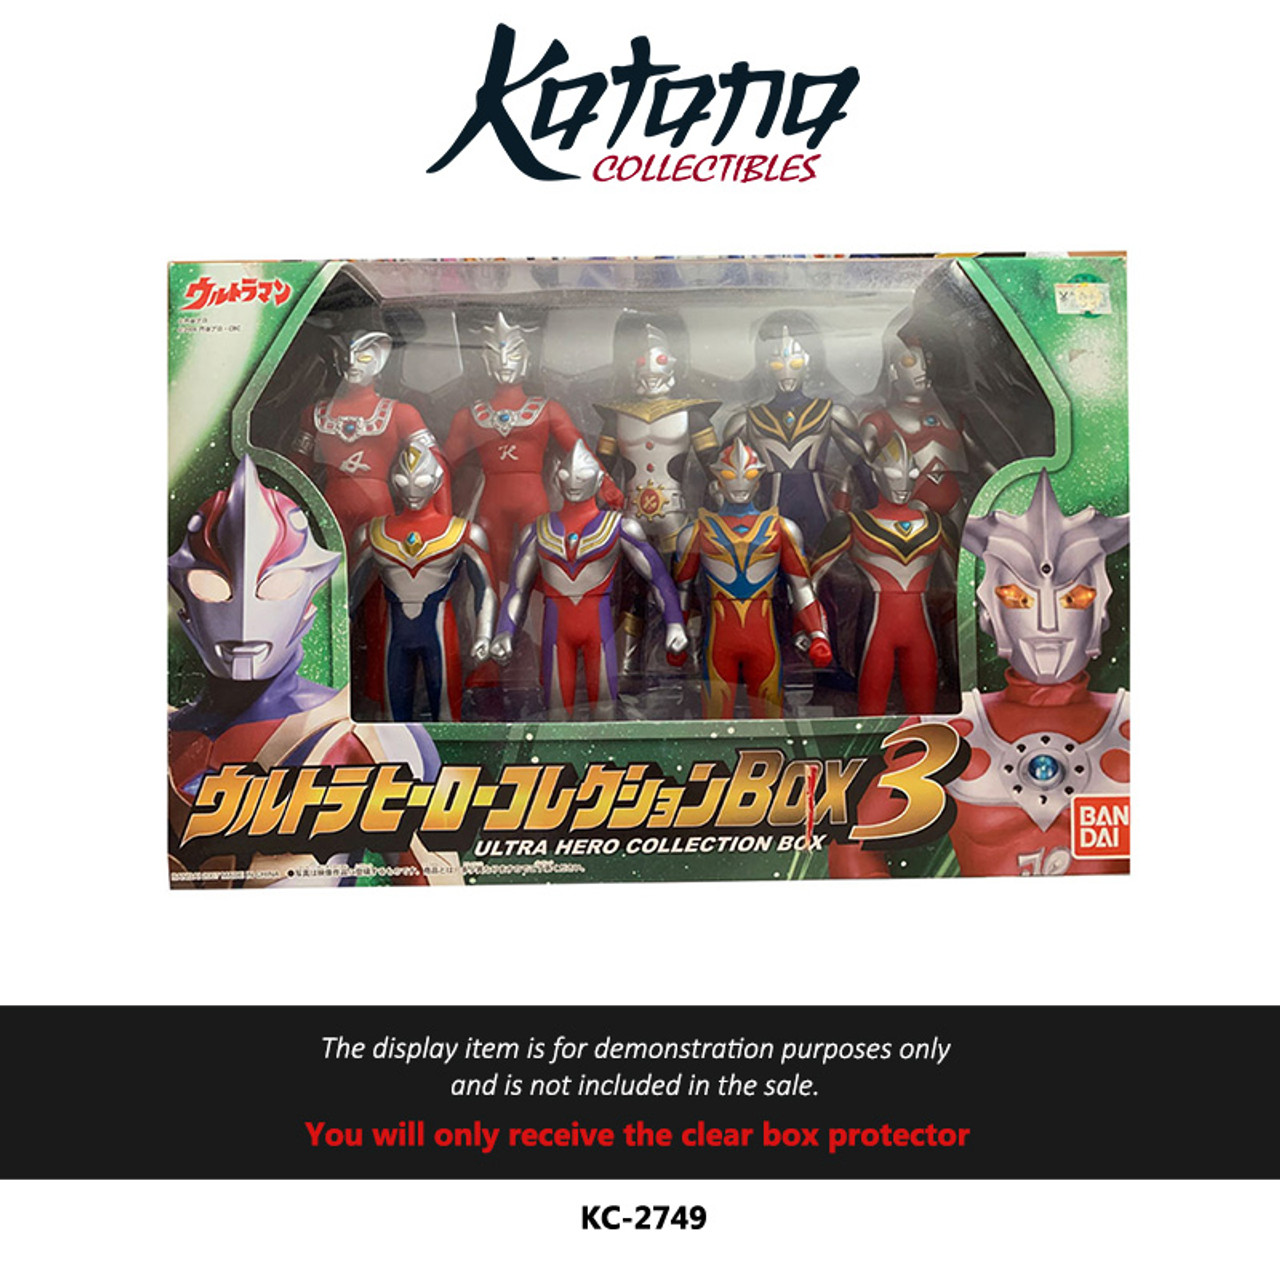 Katana Collectibles Protector For Ulta Hero Collection Box 3 From Bandai